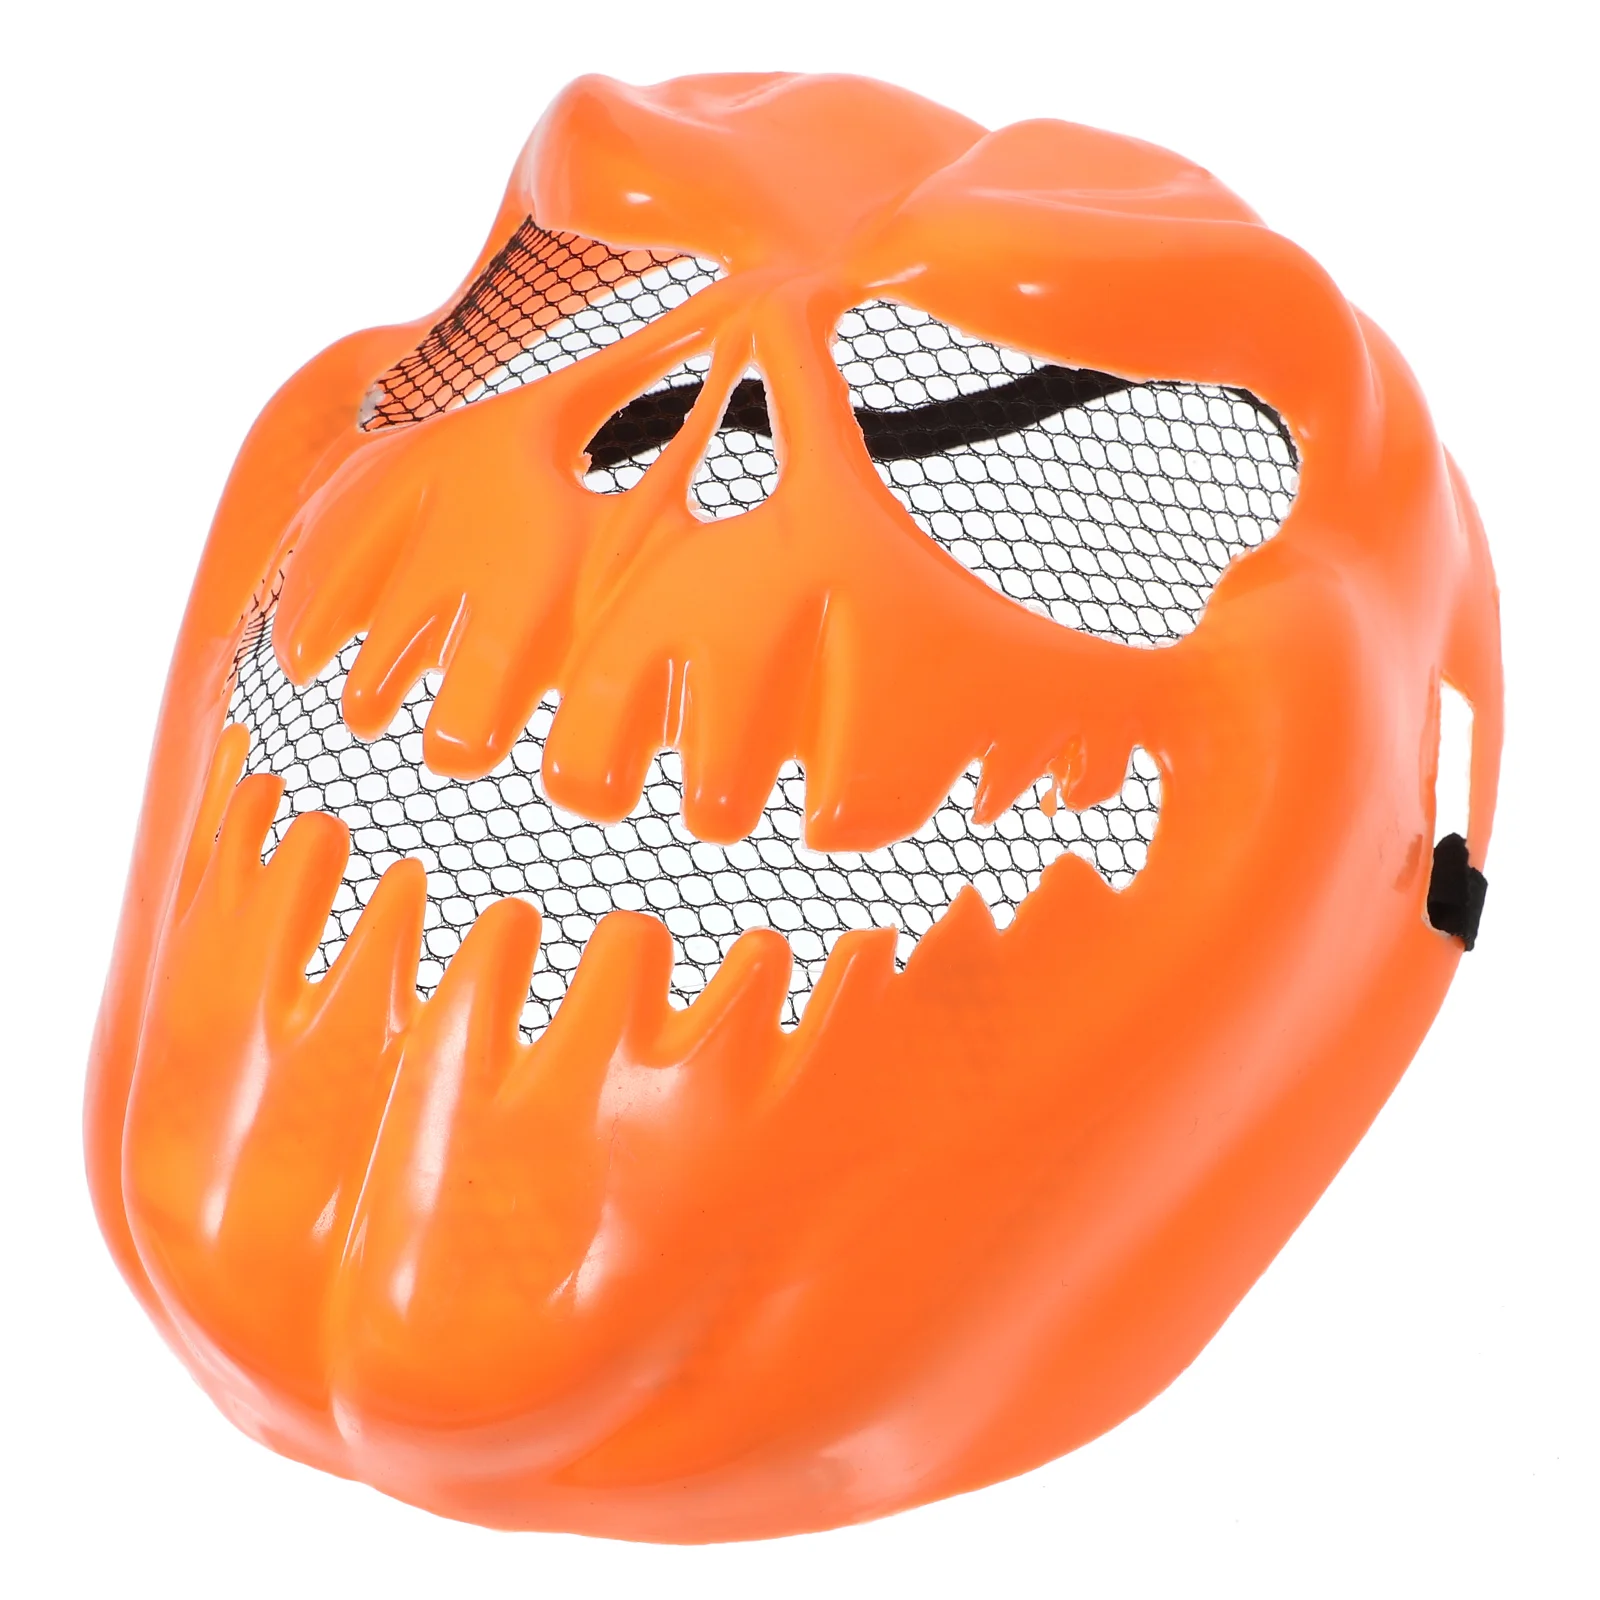 

Halloween Horror Pumpkin Mask Scary Plastic Mask Fancy Dress Party Prop Terror Mask Cosplay Mask Prom Party Favor (Orange)